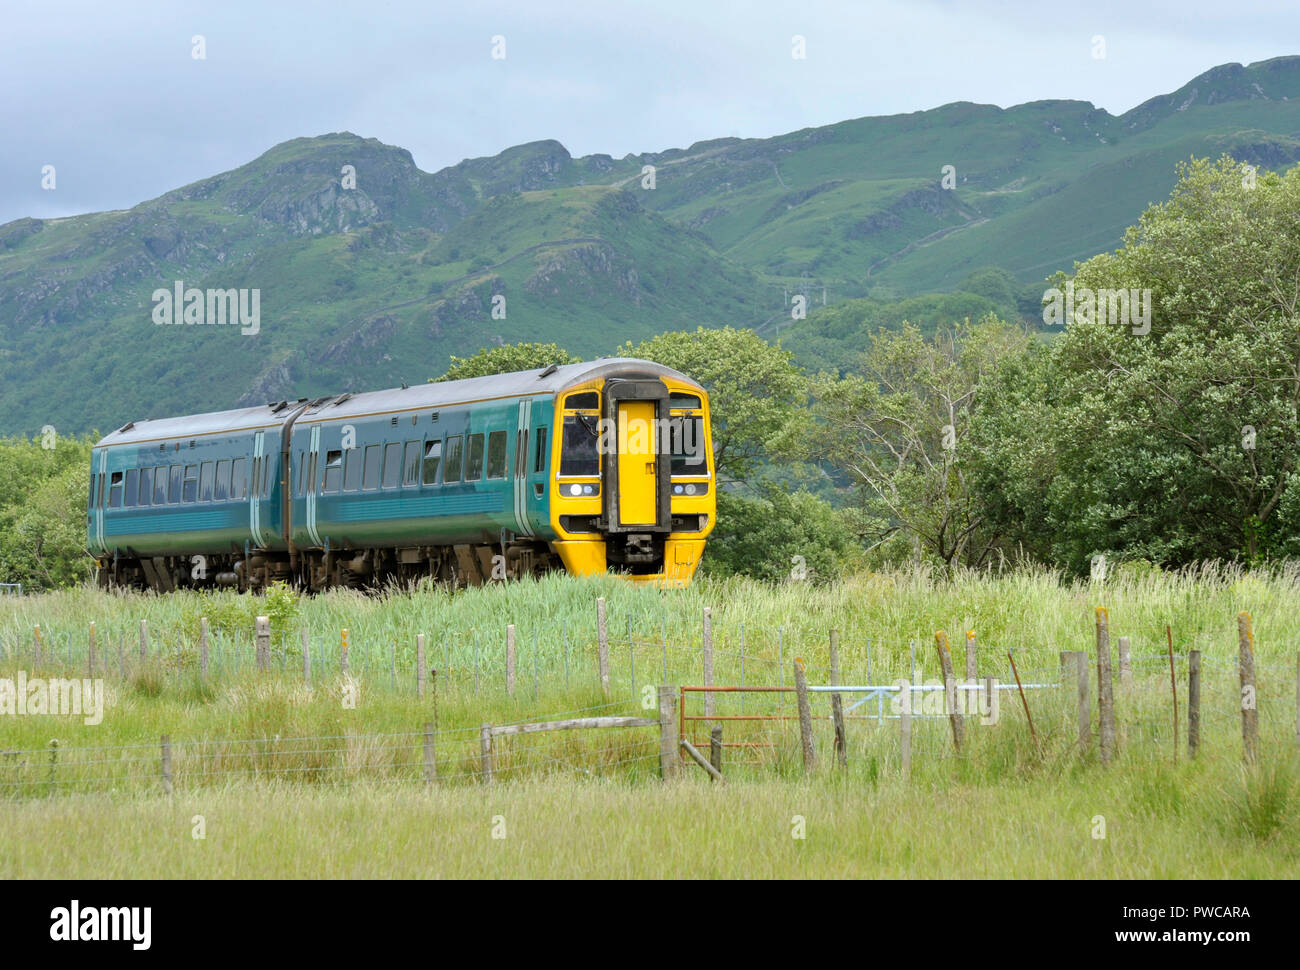 Railway diesel train locomotive in rural countryside at Talsarnau, Gwynedd in North Wales UK. Stock Photo